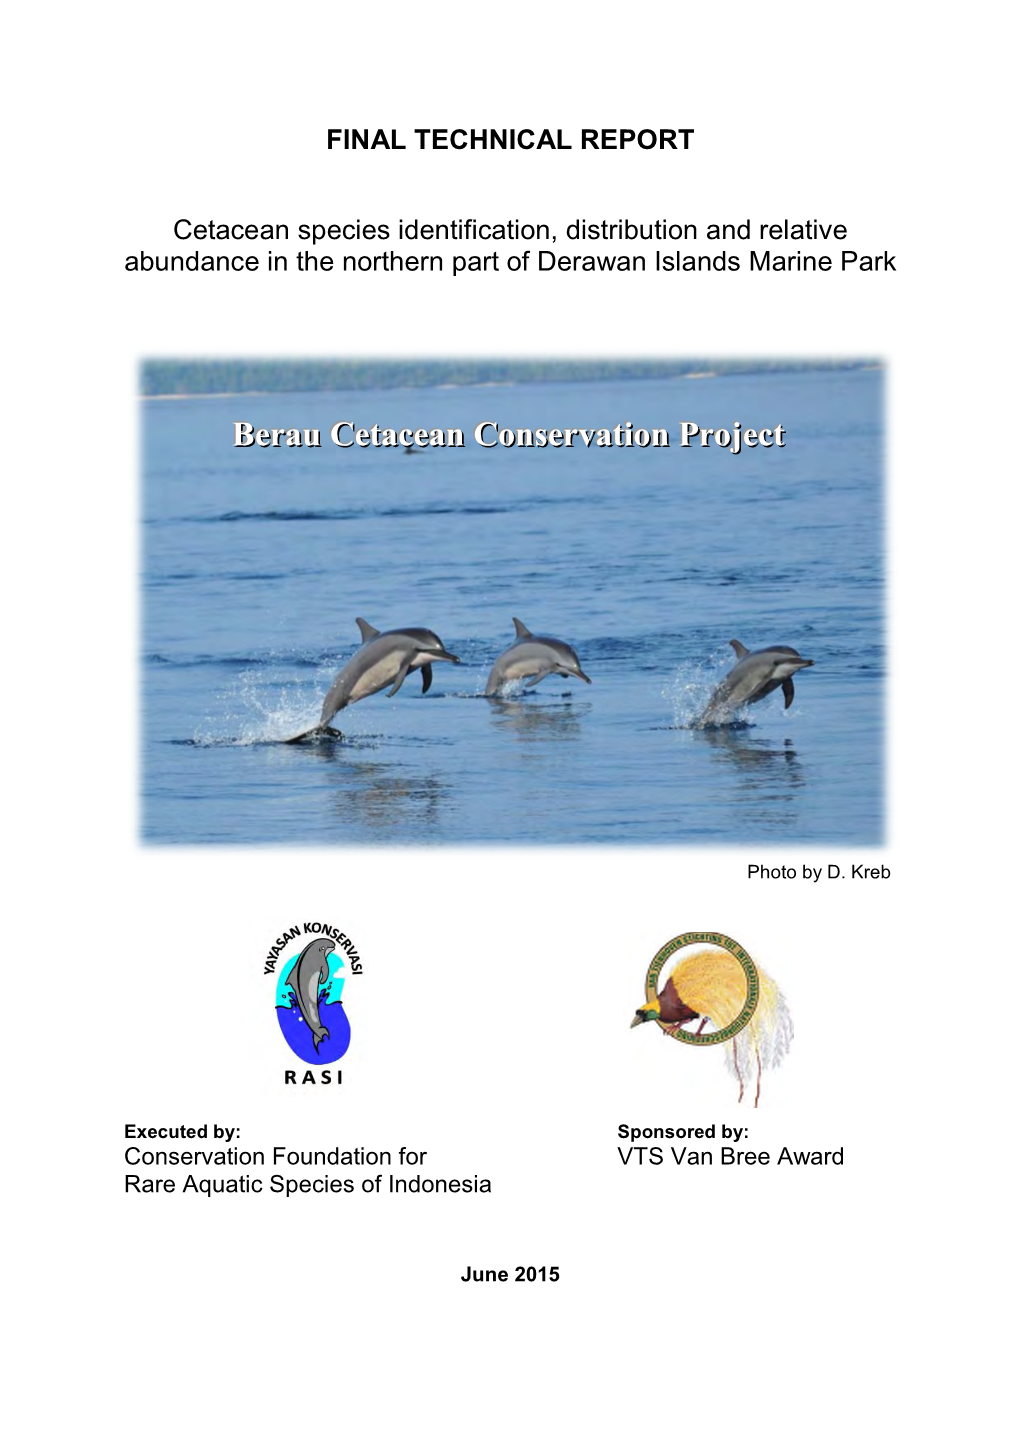 Berau Cetacean Conservation Project